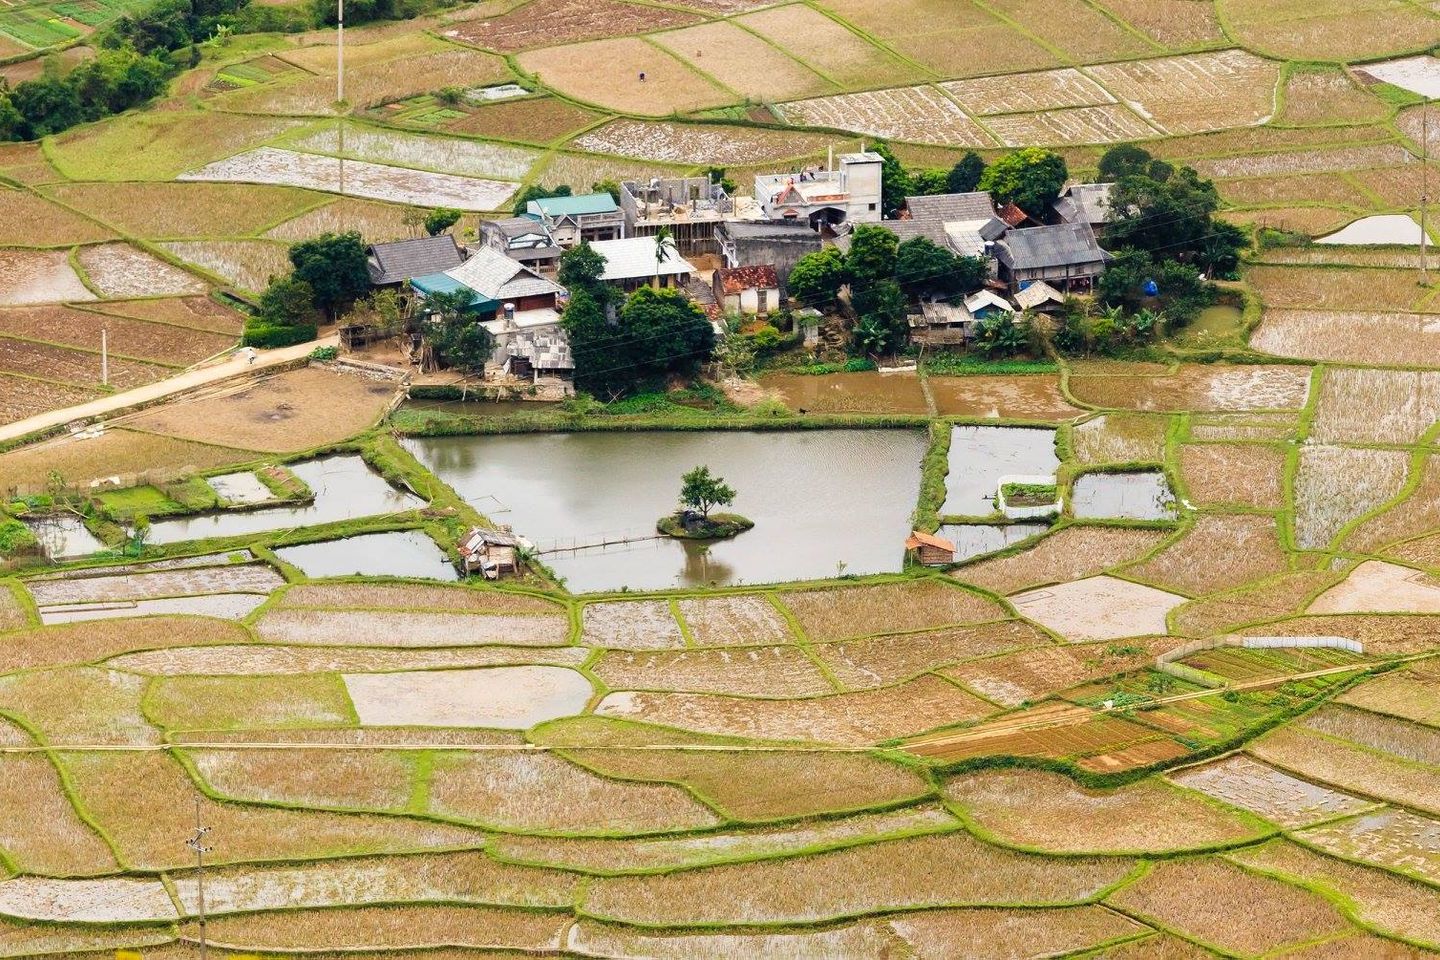 Rice paddies in Mai Chau